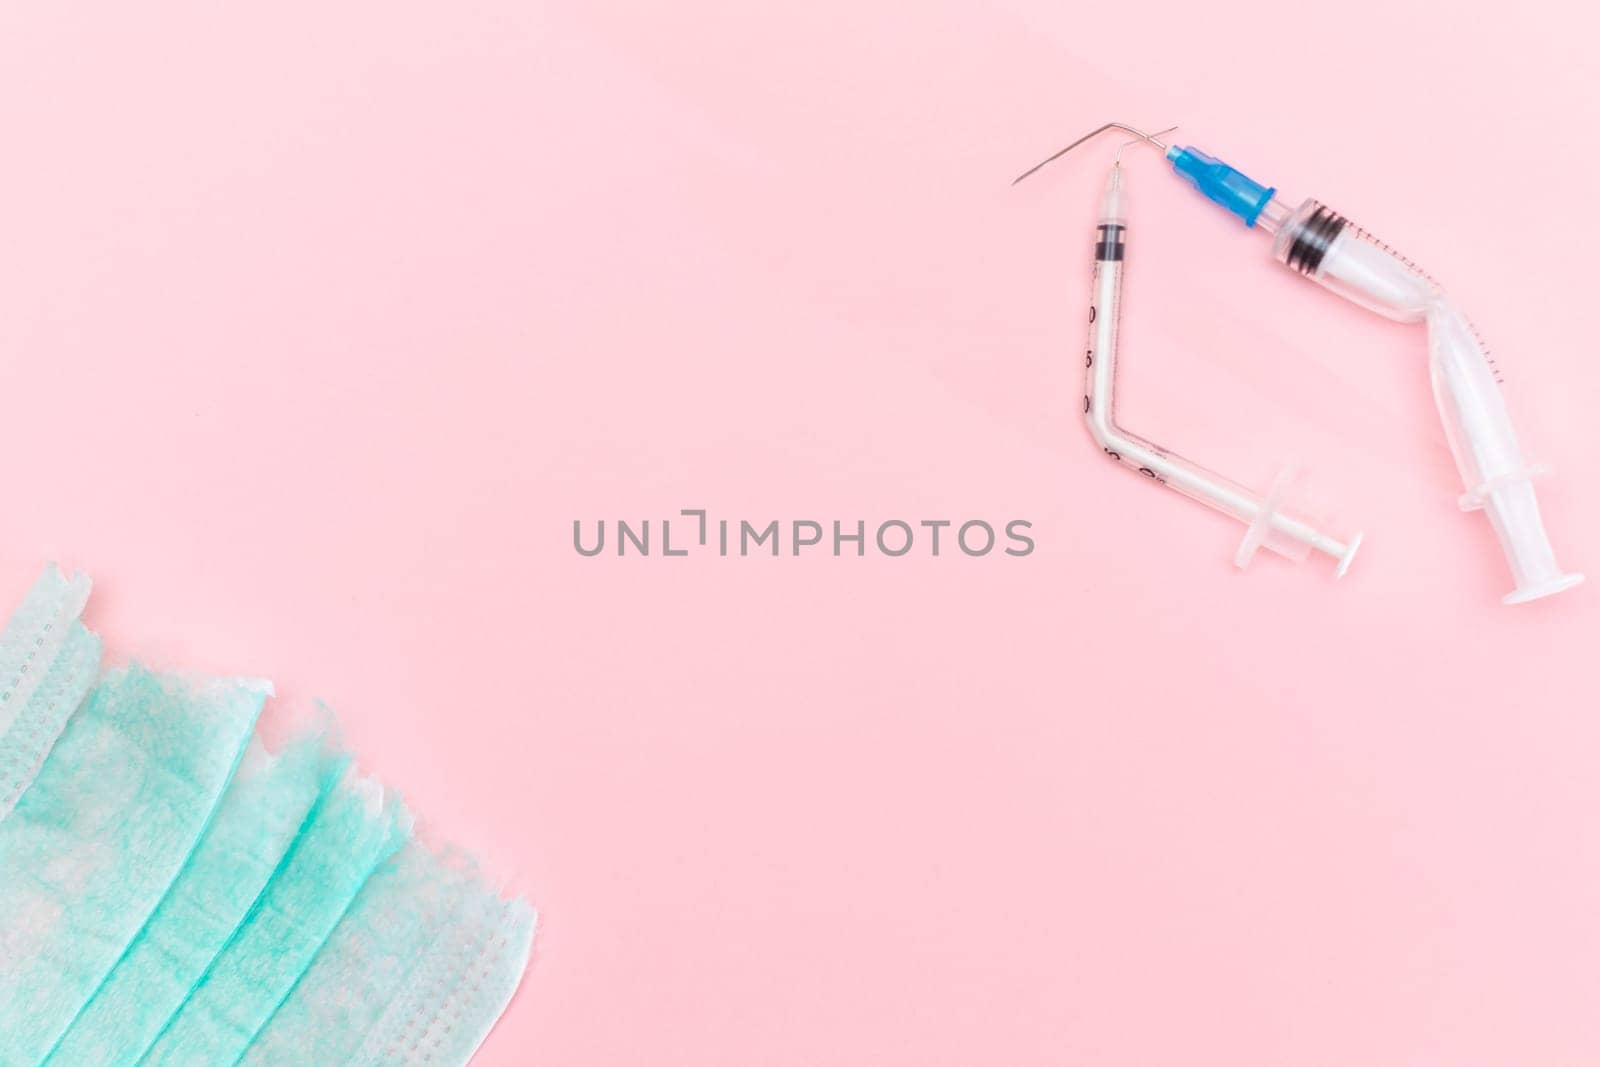 Broken Medical Syringe and Torn Medical Face Mask on the Pink Background by InfinitumProdux